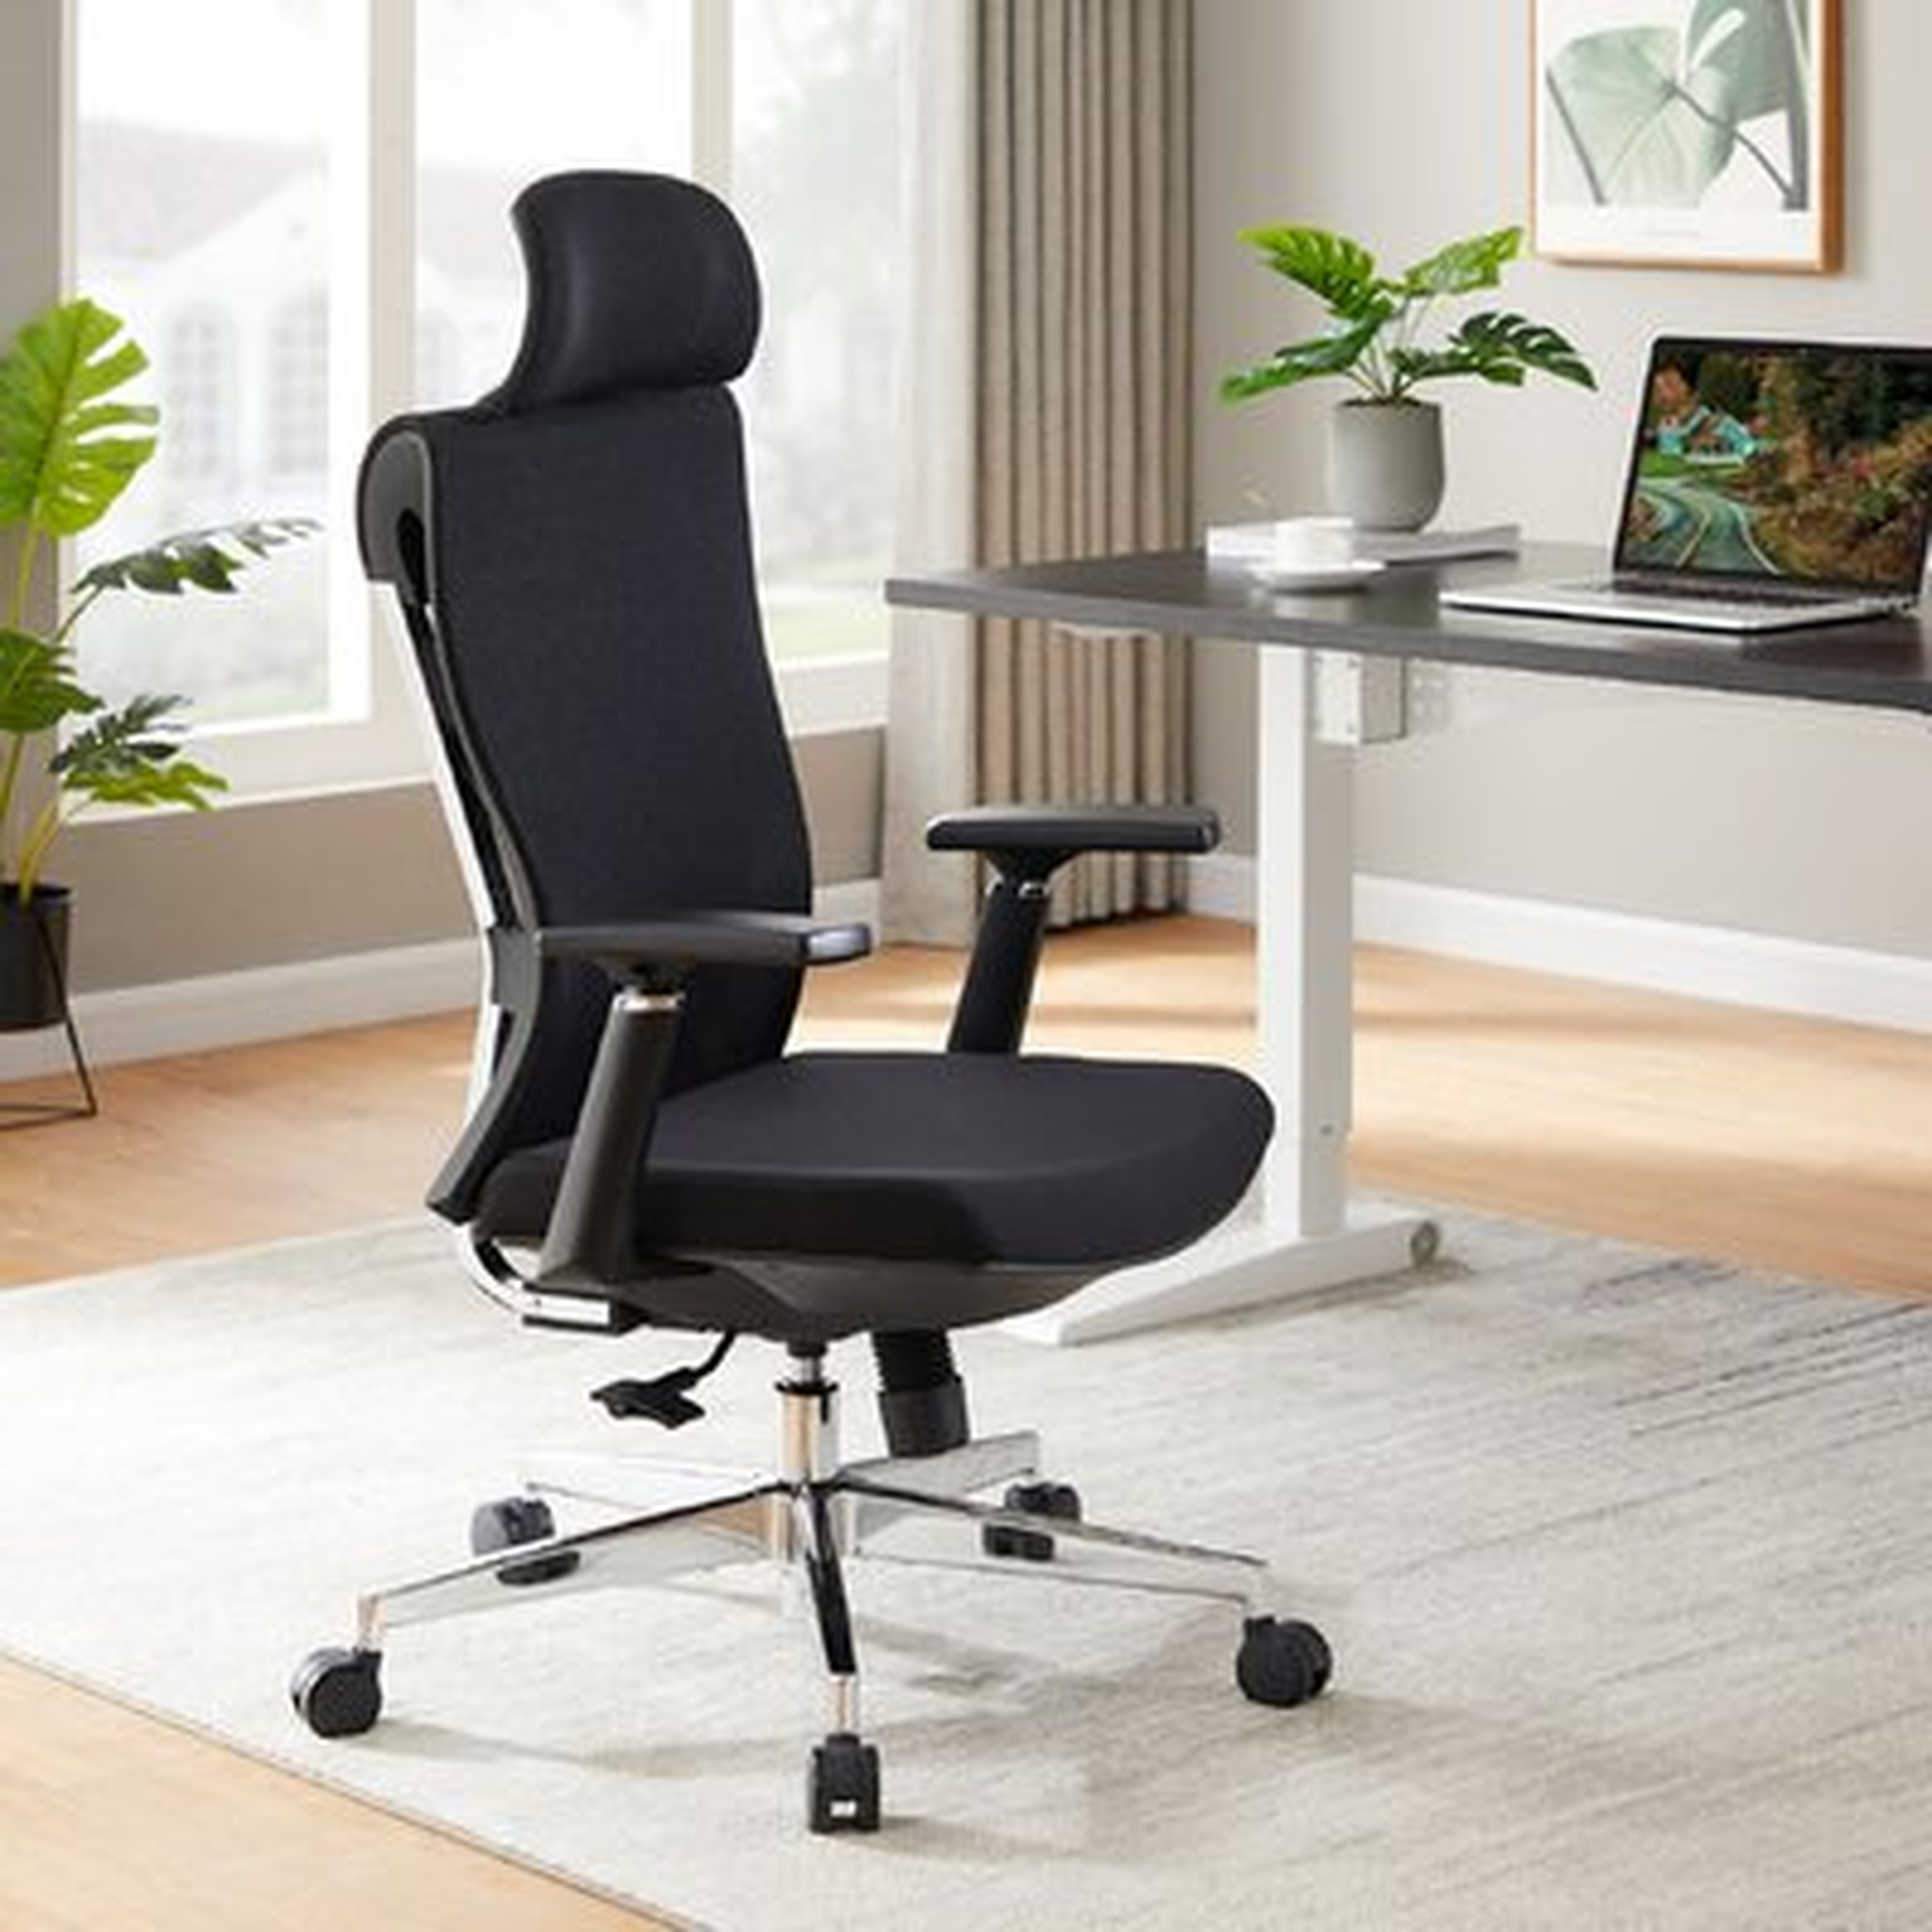 Ergonomic Chair With Lumbar Support - Wayfair